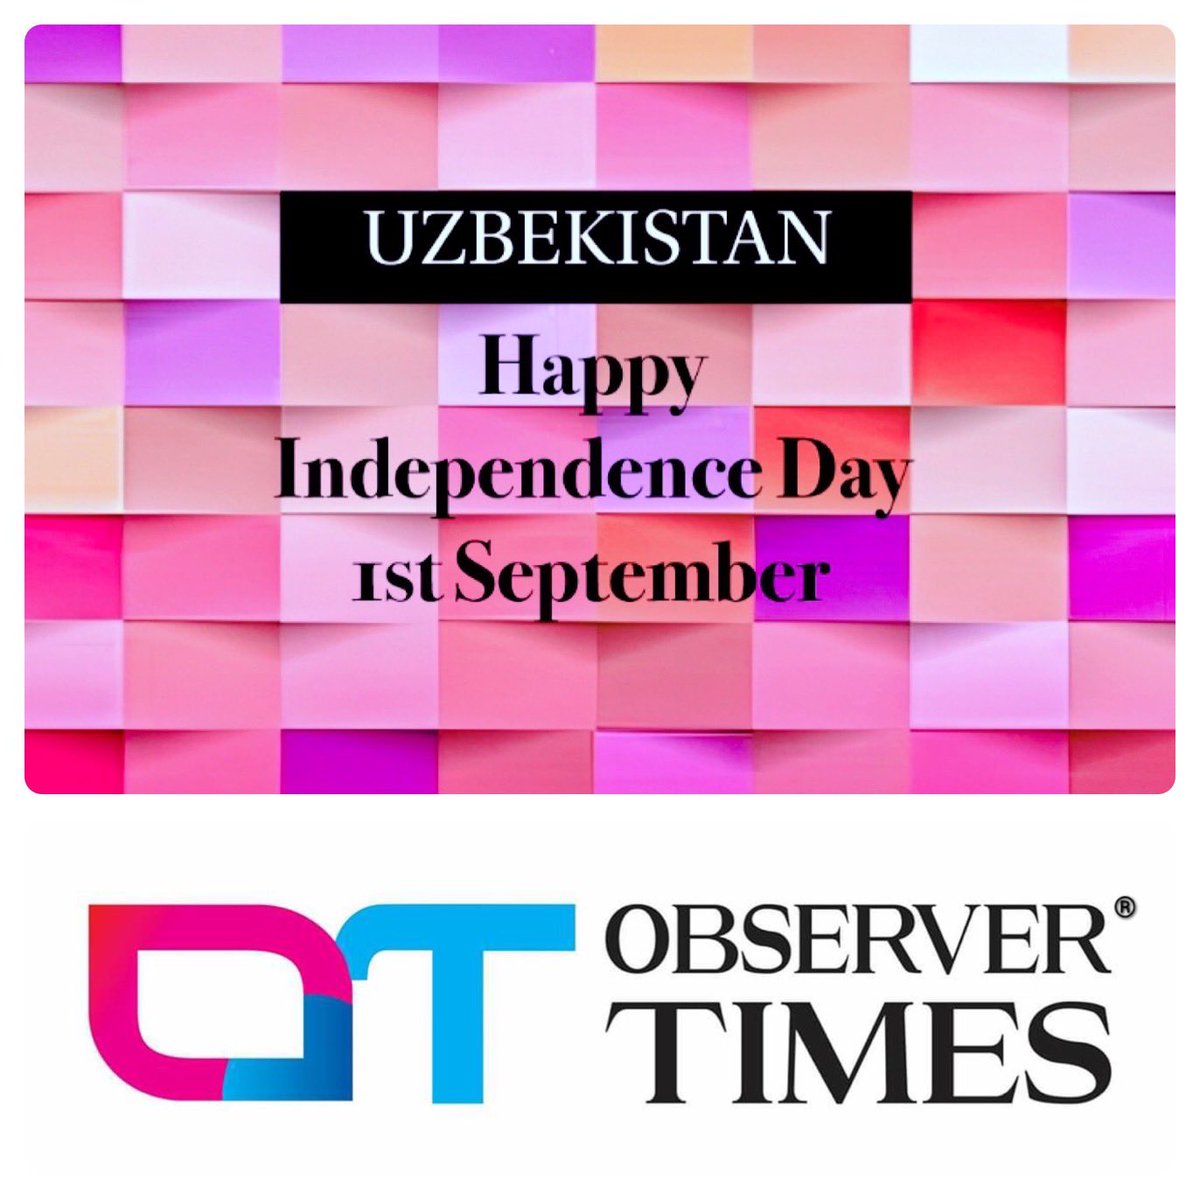 His Excellency
Shavkat Mirziyoyev,
President, 
Uzbekistan.

We are cordially congratulating His Excellency and the people of Uzbekistan on the auspicious Independence Day. 

Happy Independence Day!
Mutlu bağımsızlık Günü!

@uzbekistanun @un_uzbekistan